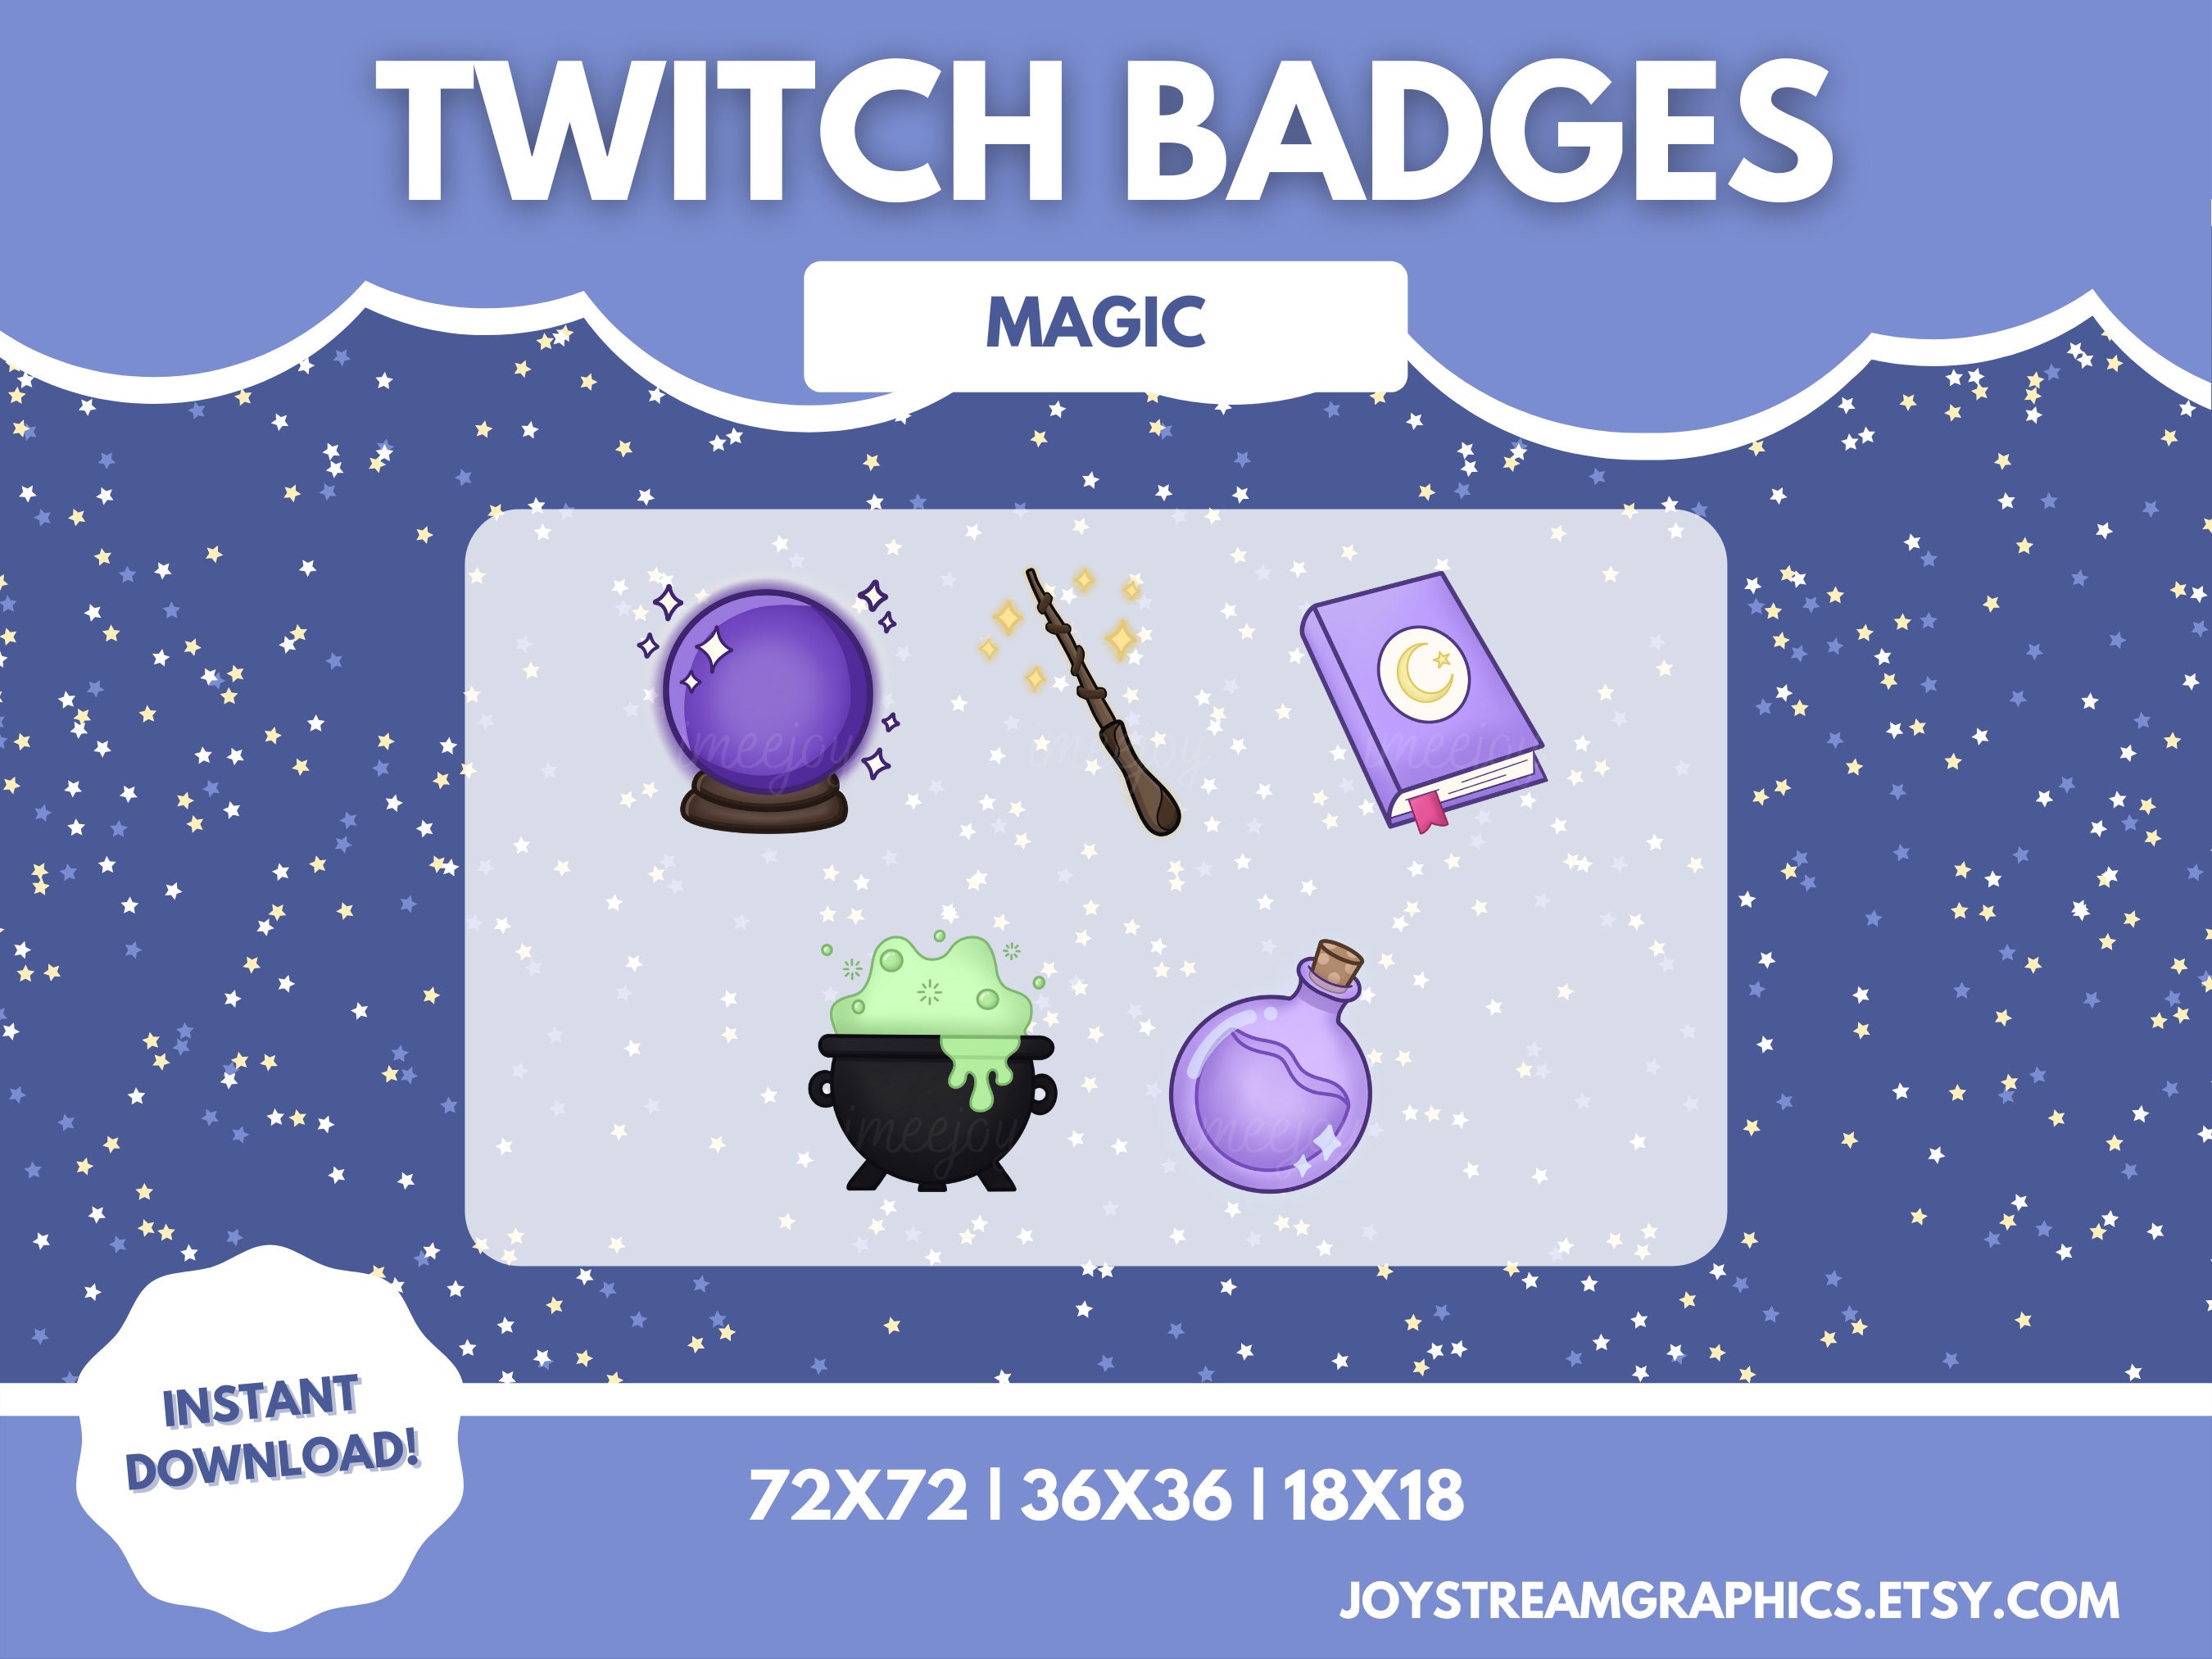 Magic Sub Badges, Book Sub Badges, Twitch Hat Sub Badges, Twitch Sub Badge,  Magic Ball Sub Badge, Position Twitch Badges, Pen Sub Badges 